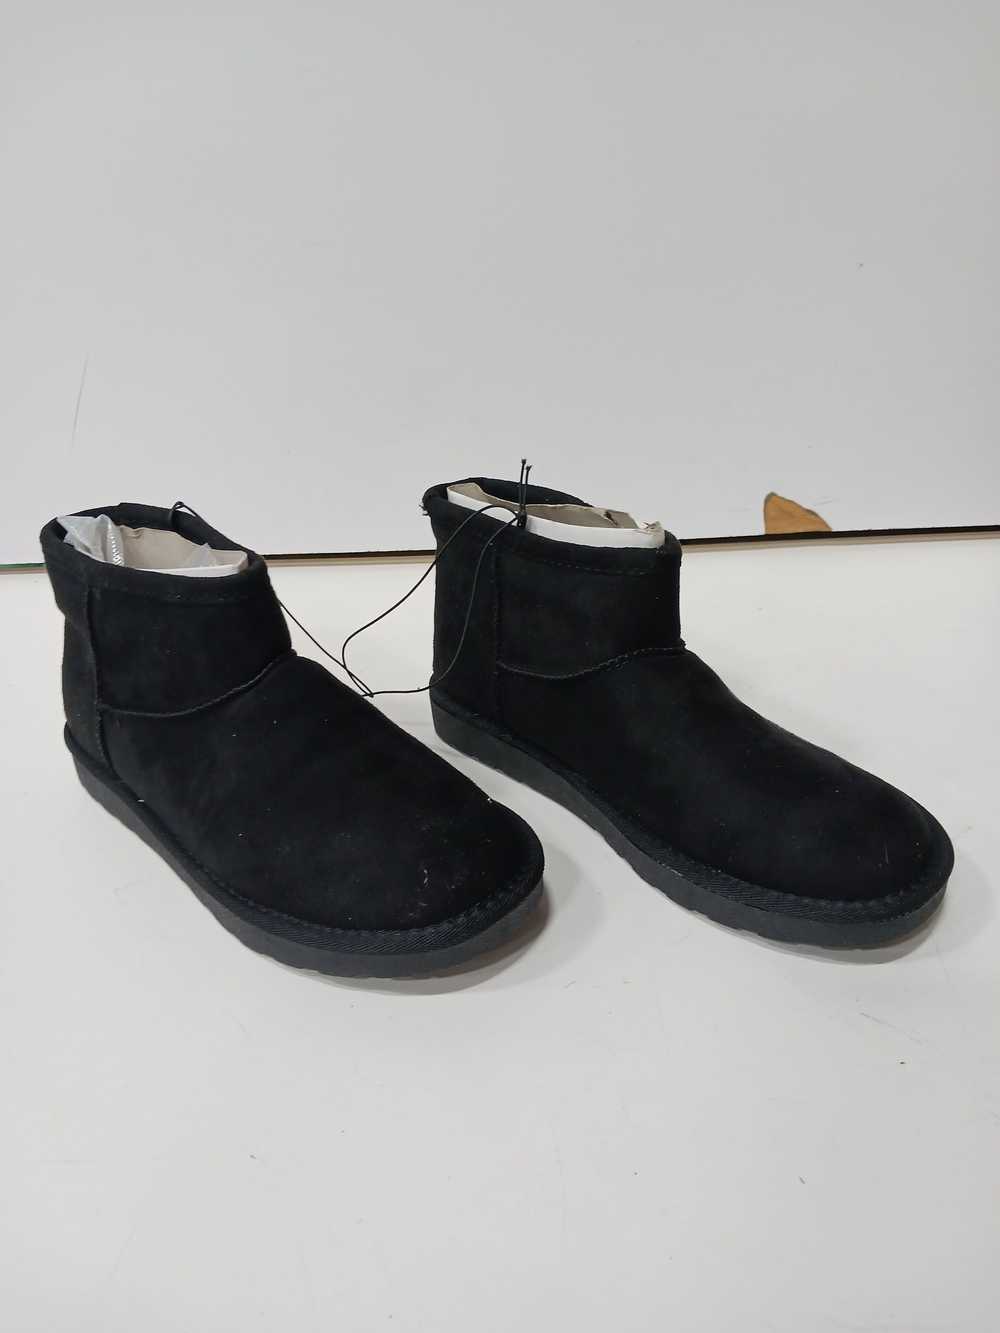 Arizona Jean Co. Women's Black Boots Size 7 - image 2